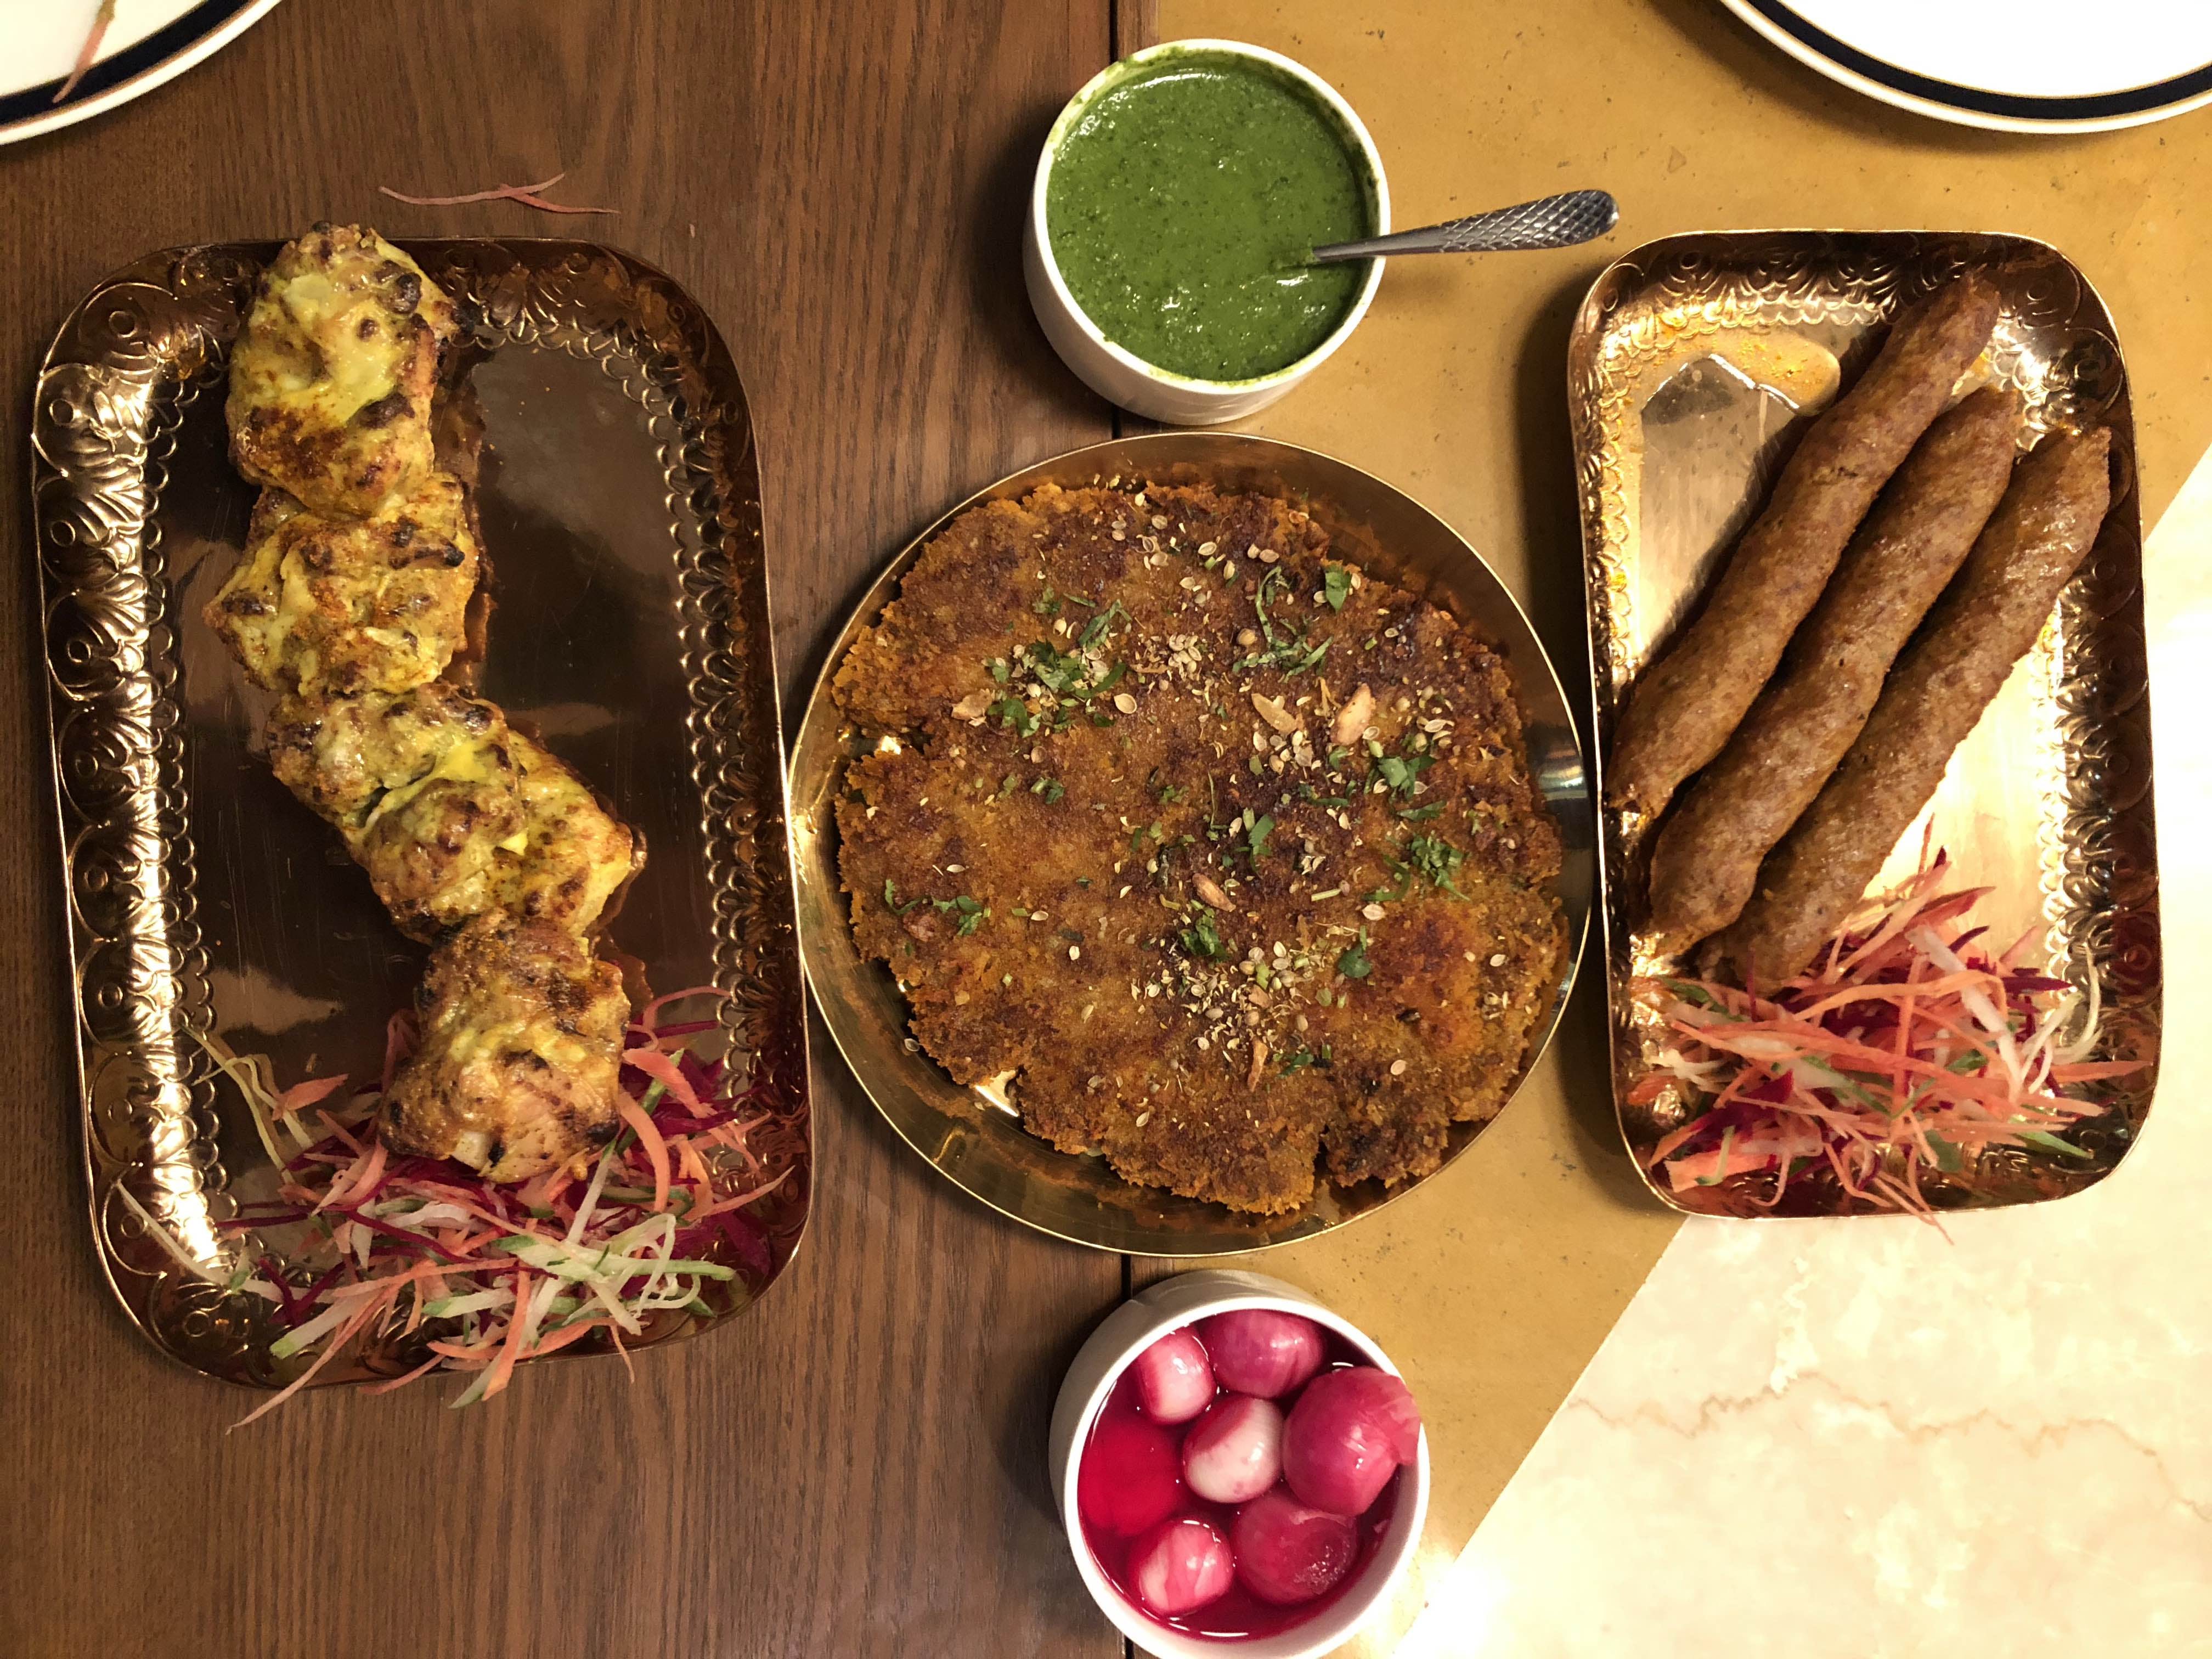 Food,Dish,Cuisine,Ingredient,Vegetarian food,Meal,Produce,Indian cuisine,Charcuterie